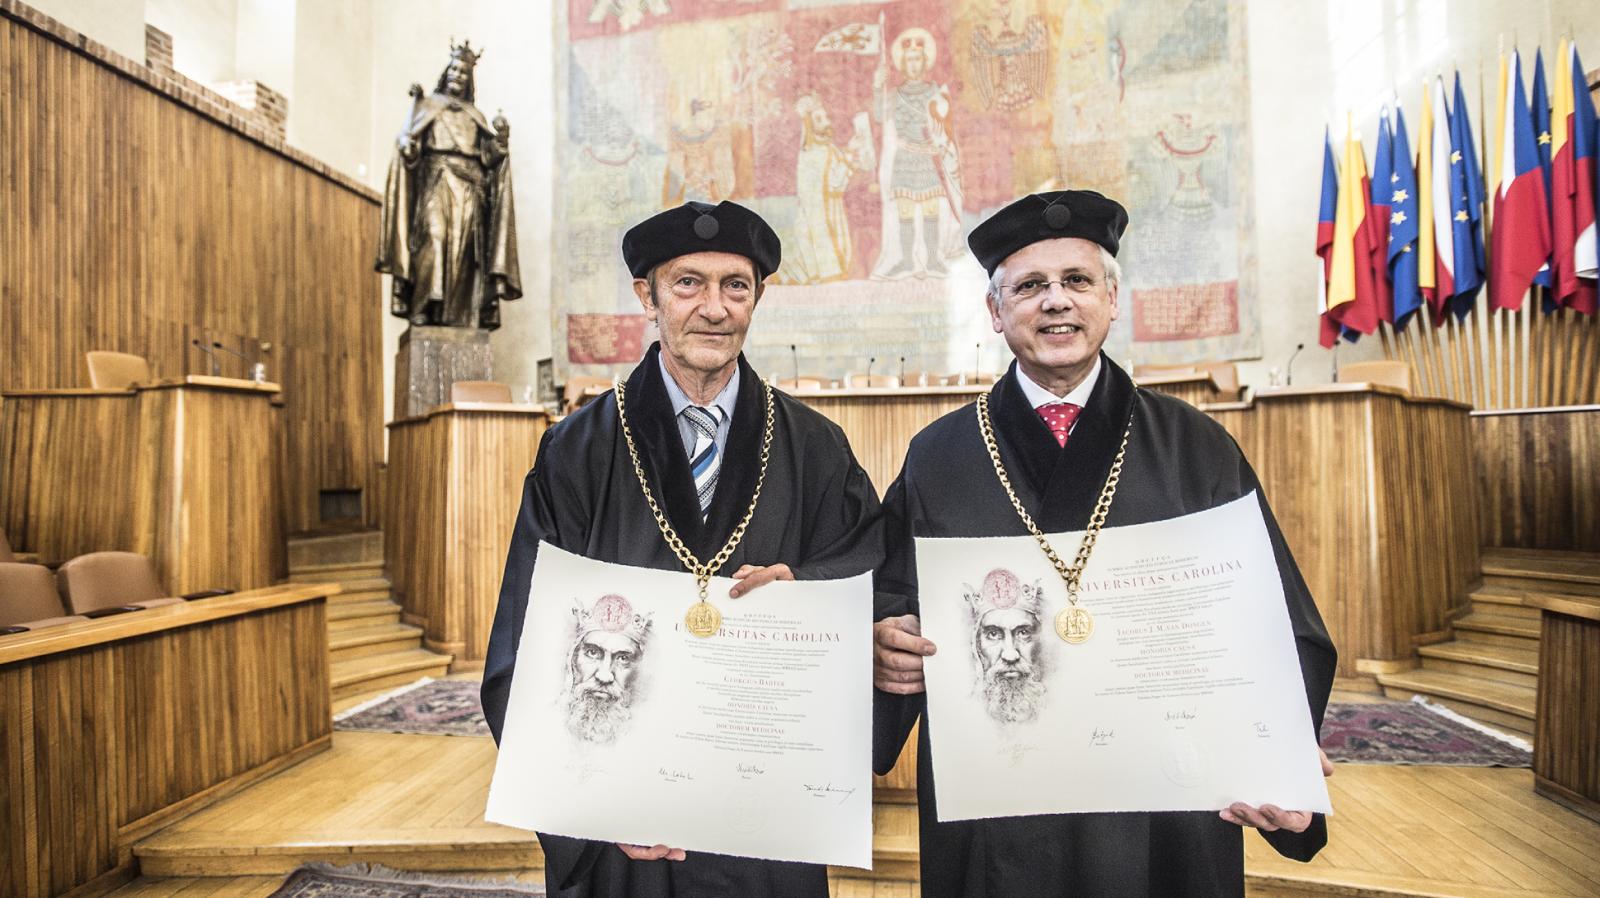 Molecular biologist Bártek and immunologist van Dongen receive honorary degrees